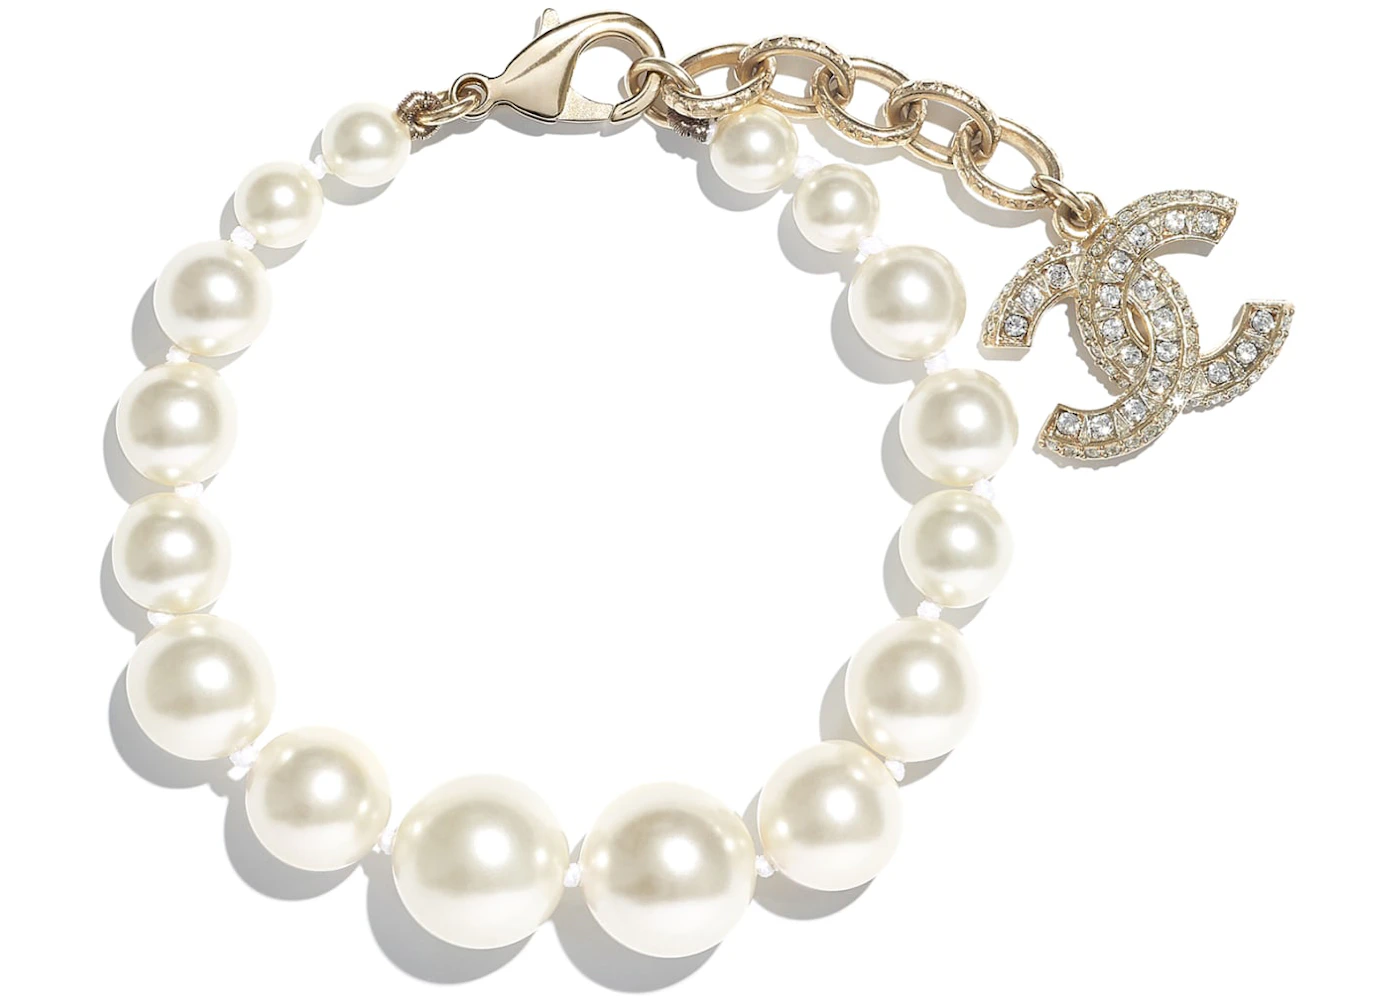 Chanel Interlocking Bracelet Gold/White/Crystal in Metal/Glass